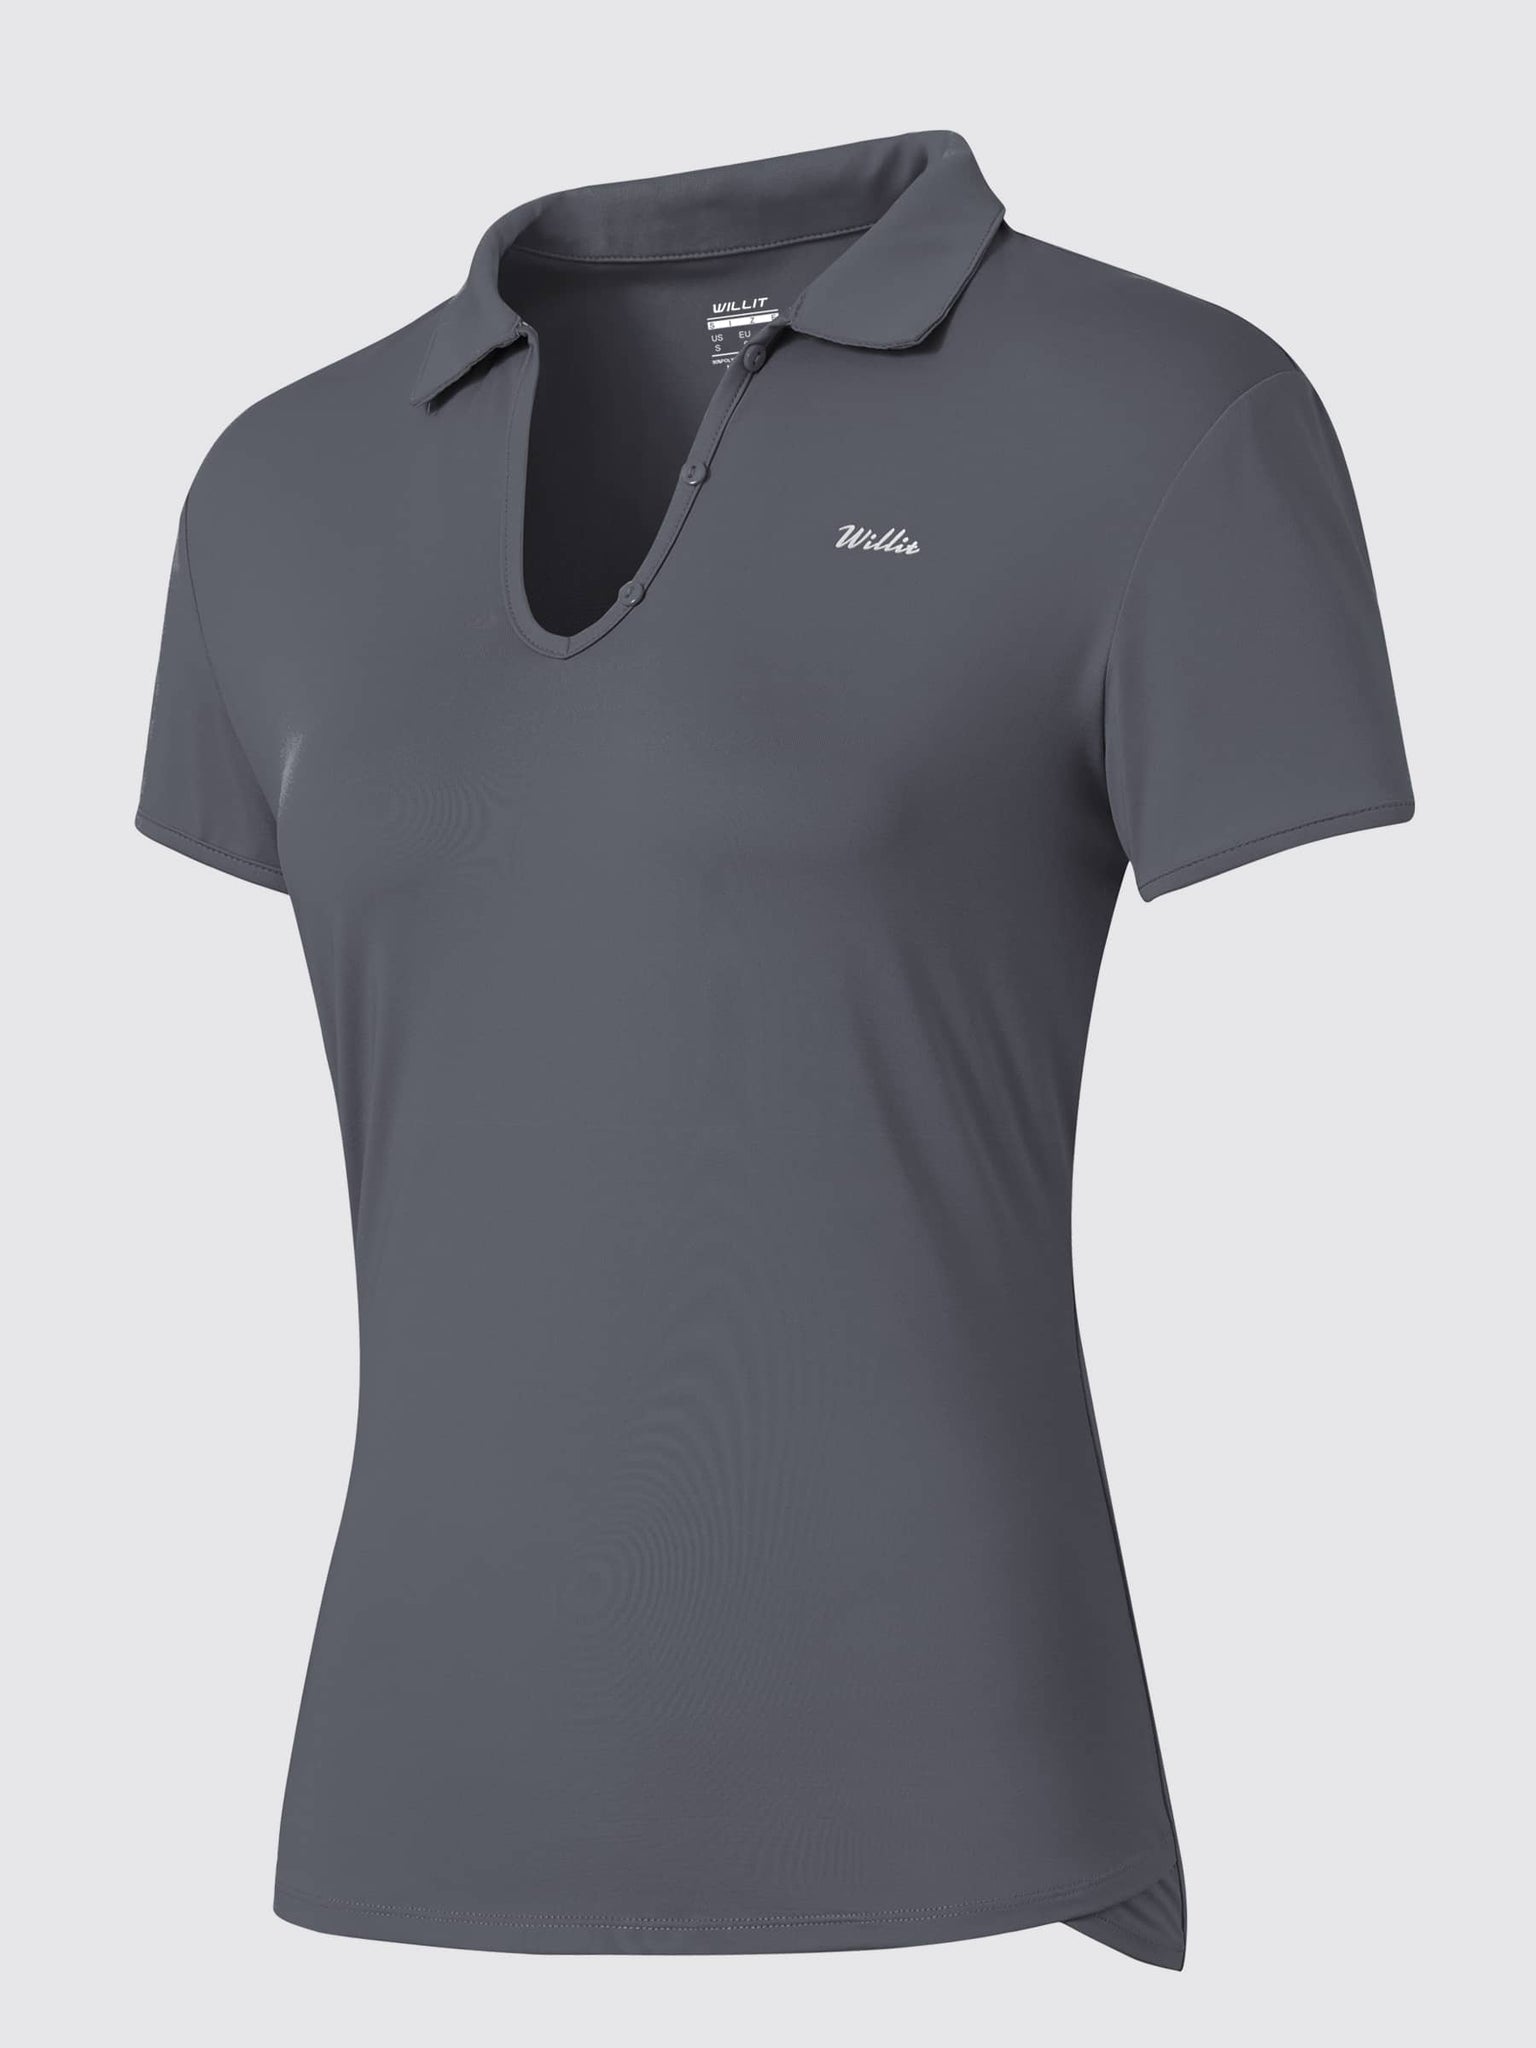 Willit Women's Golf Polo Short Sleeve Shirts_Gray2